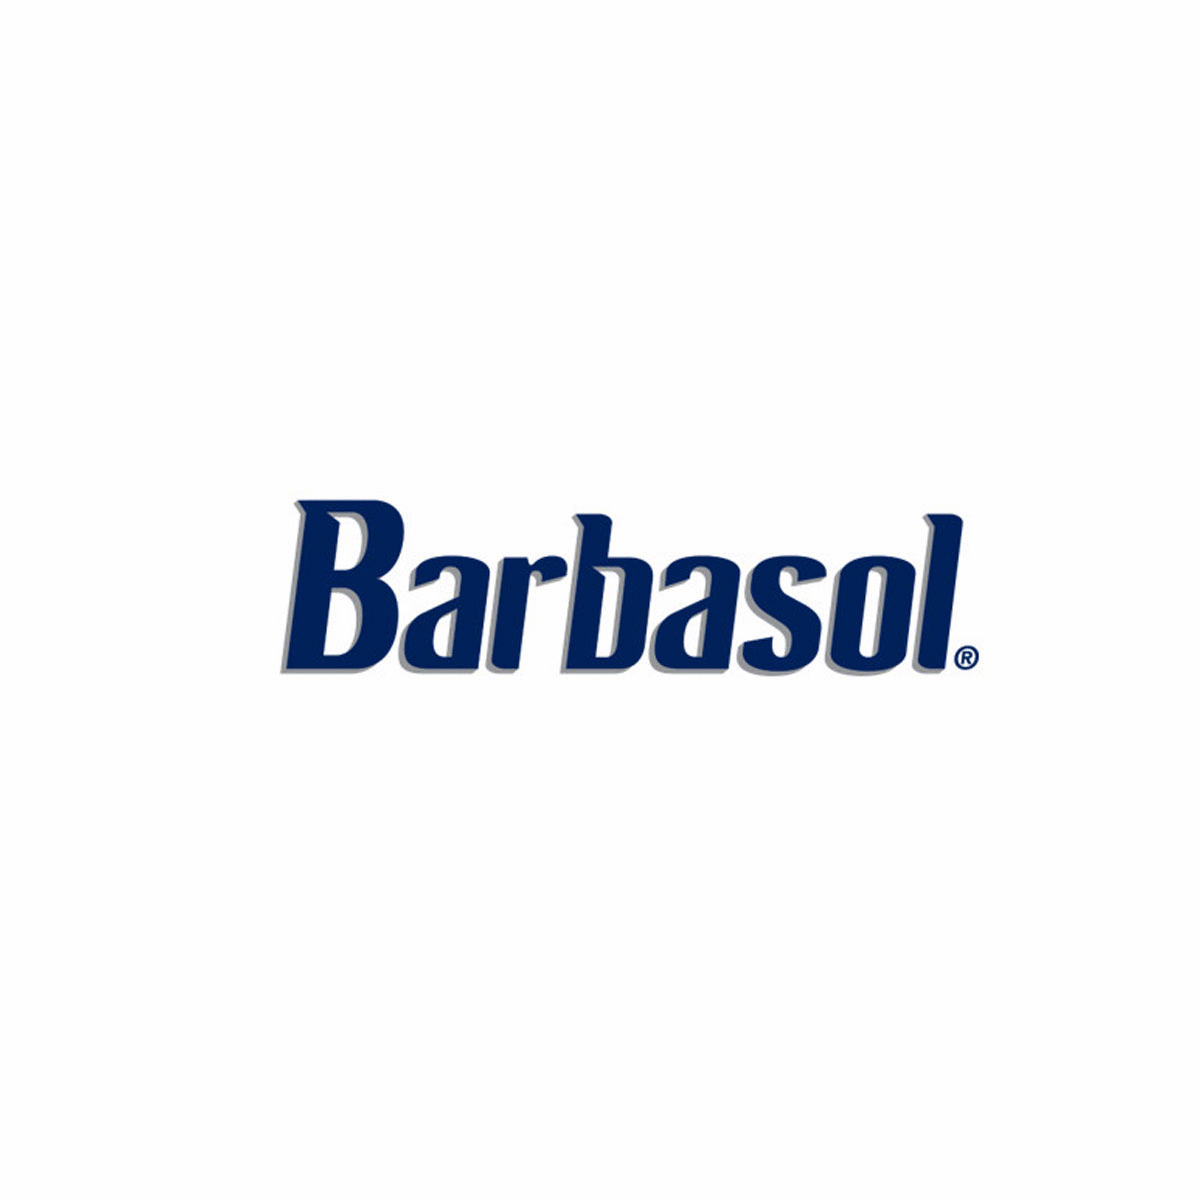 Barbasol®